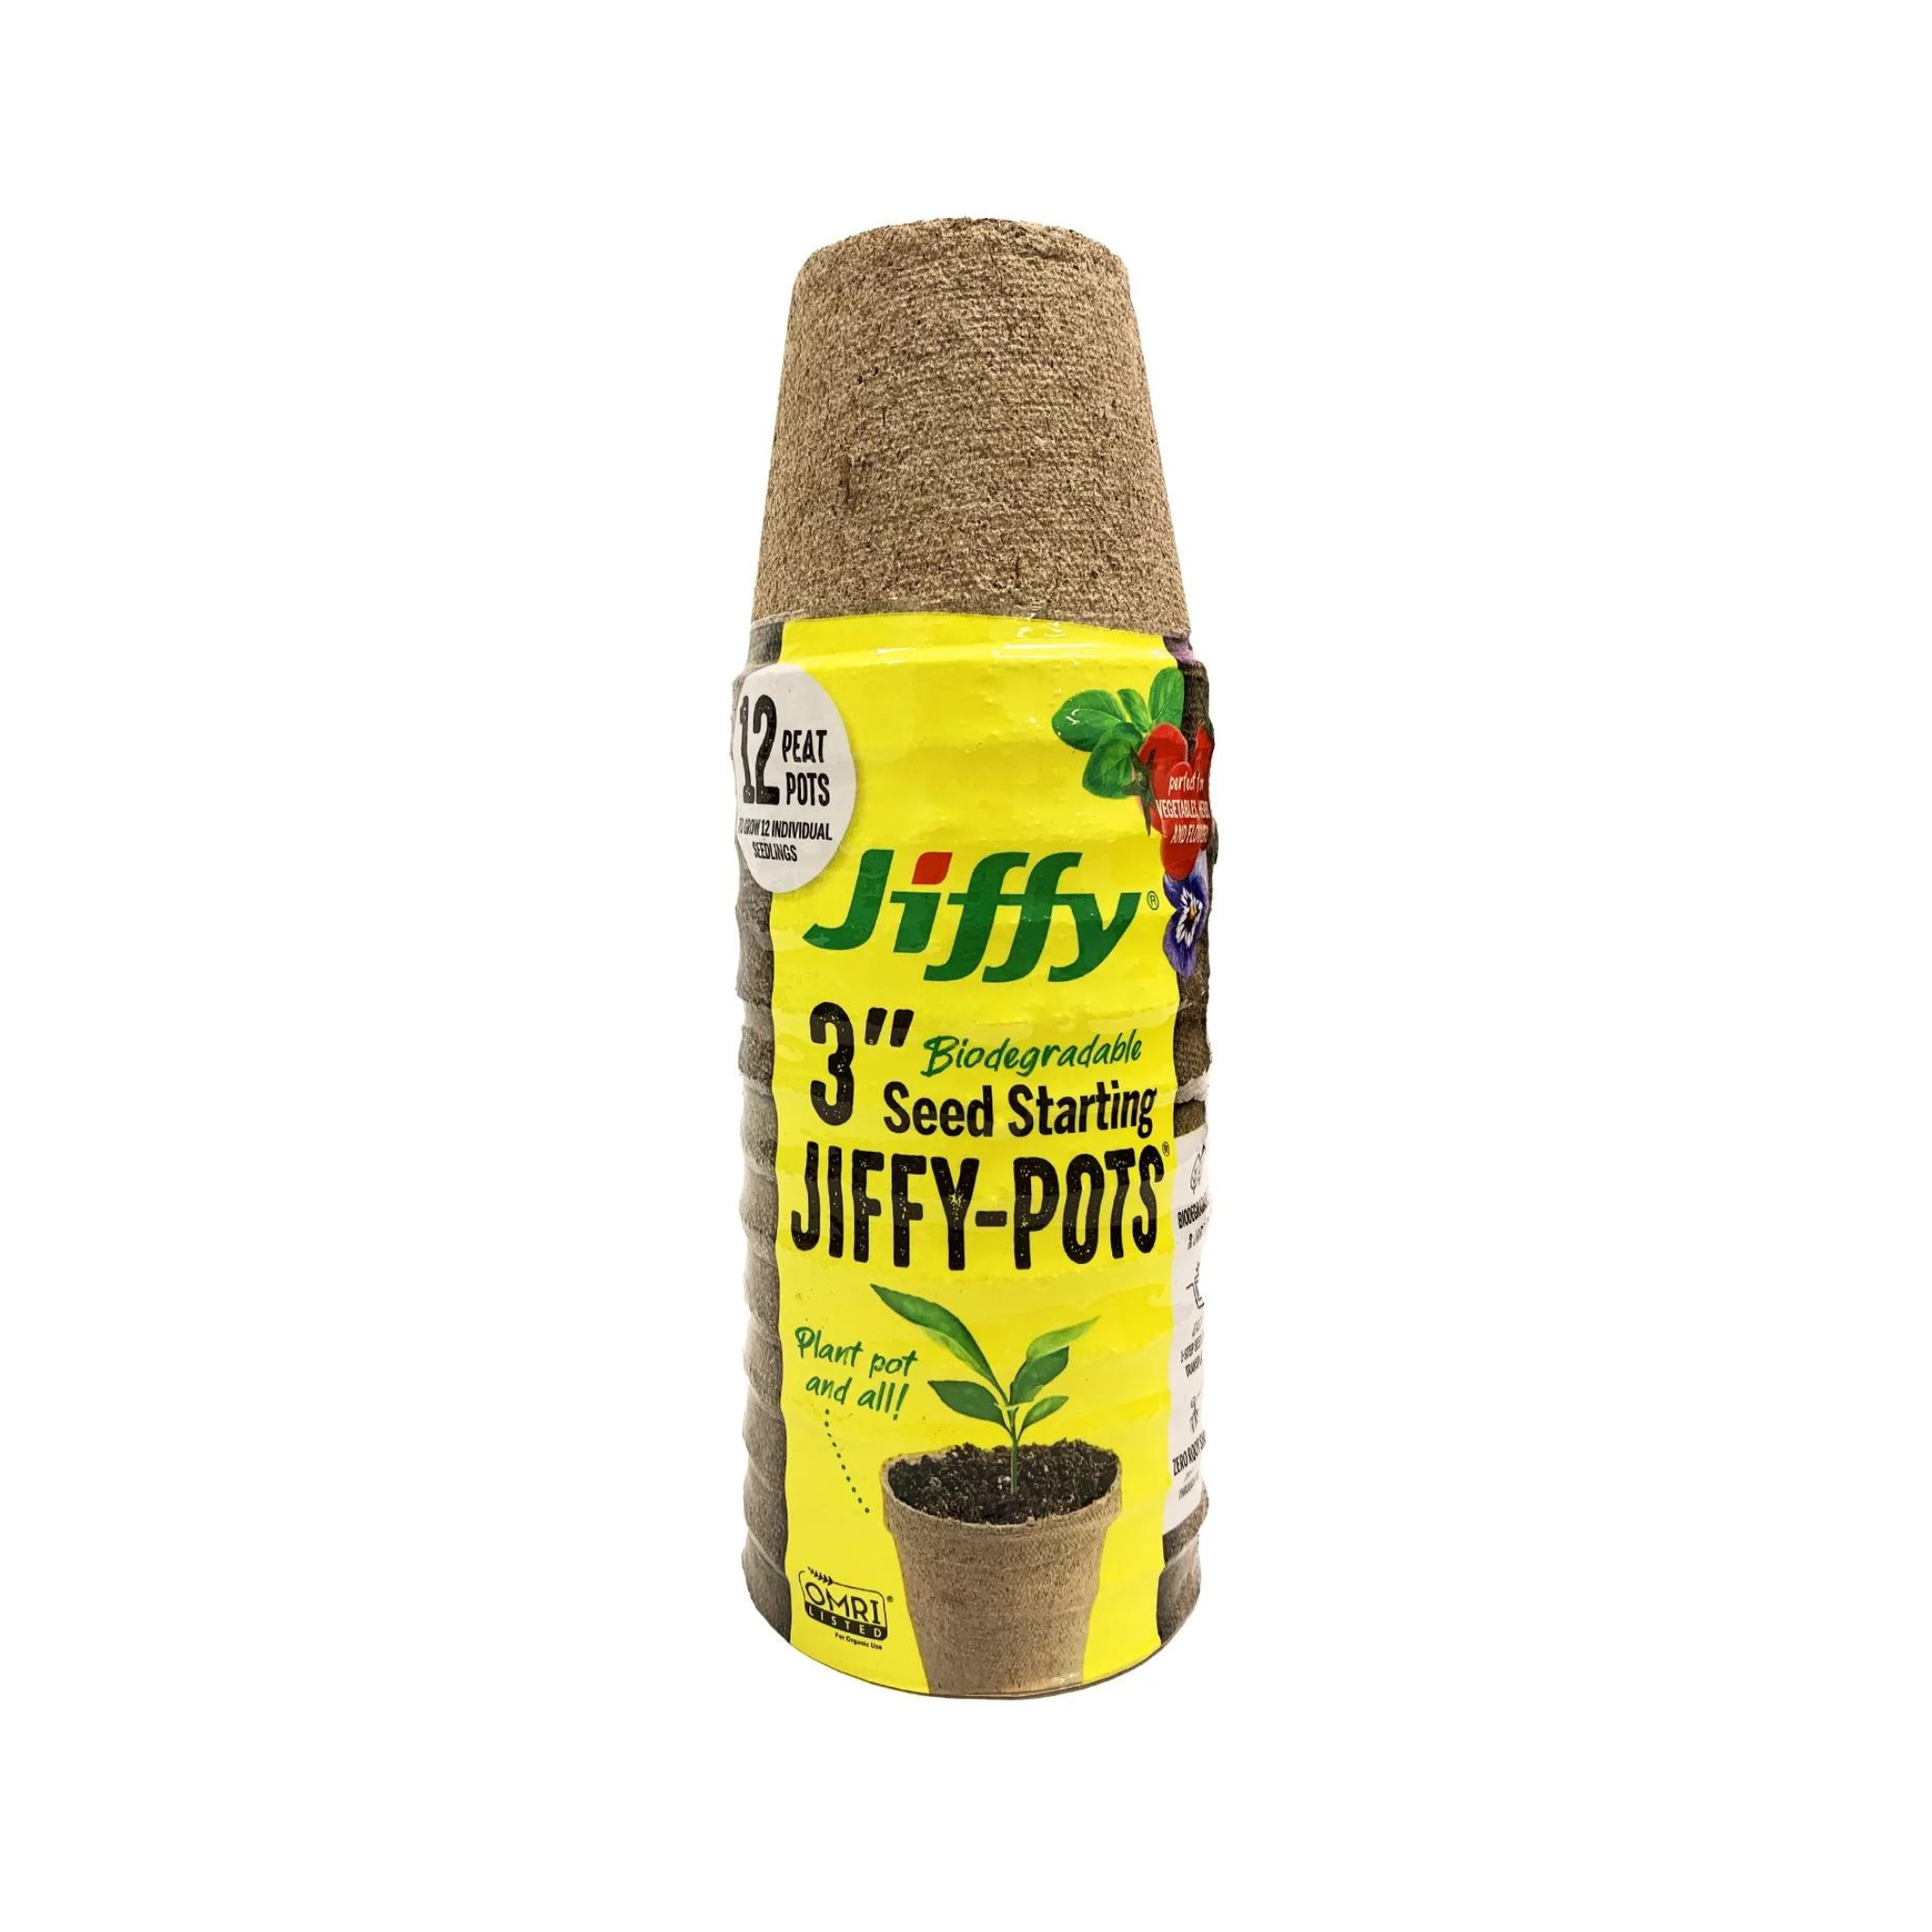 12-Pack Jiffy 3" Biodegradable Seed Starting Jiffy-Pots